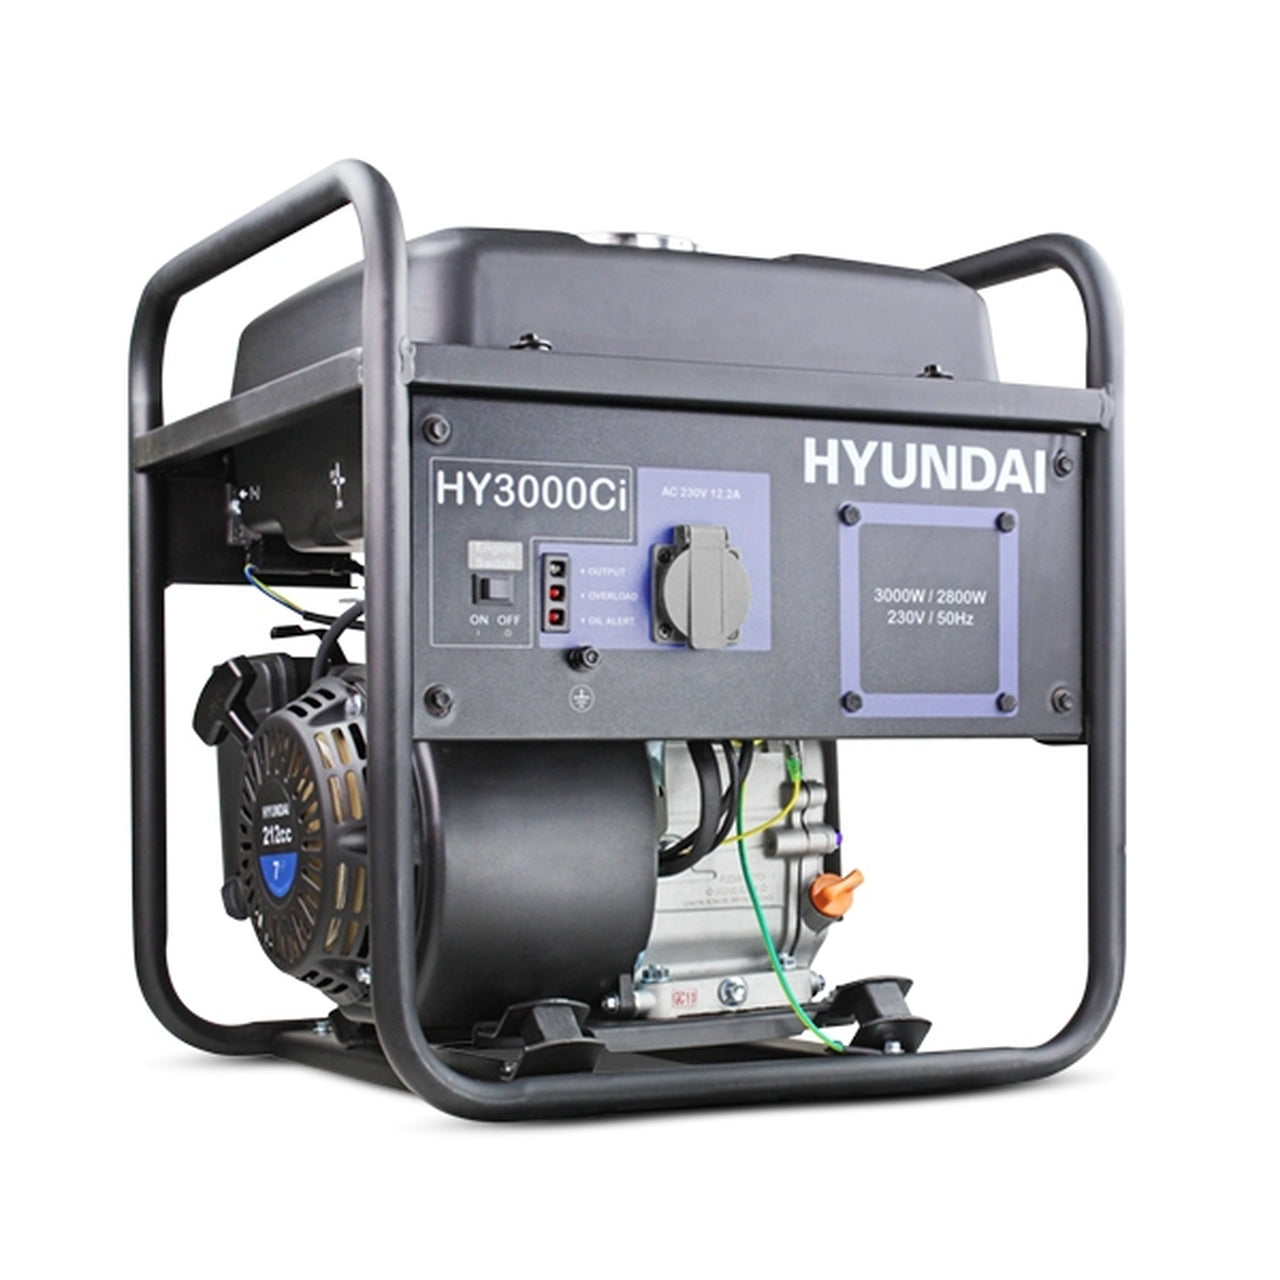 Hyundai-HY3000CI-3000W-Converter-Generator-212cc-7hp